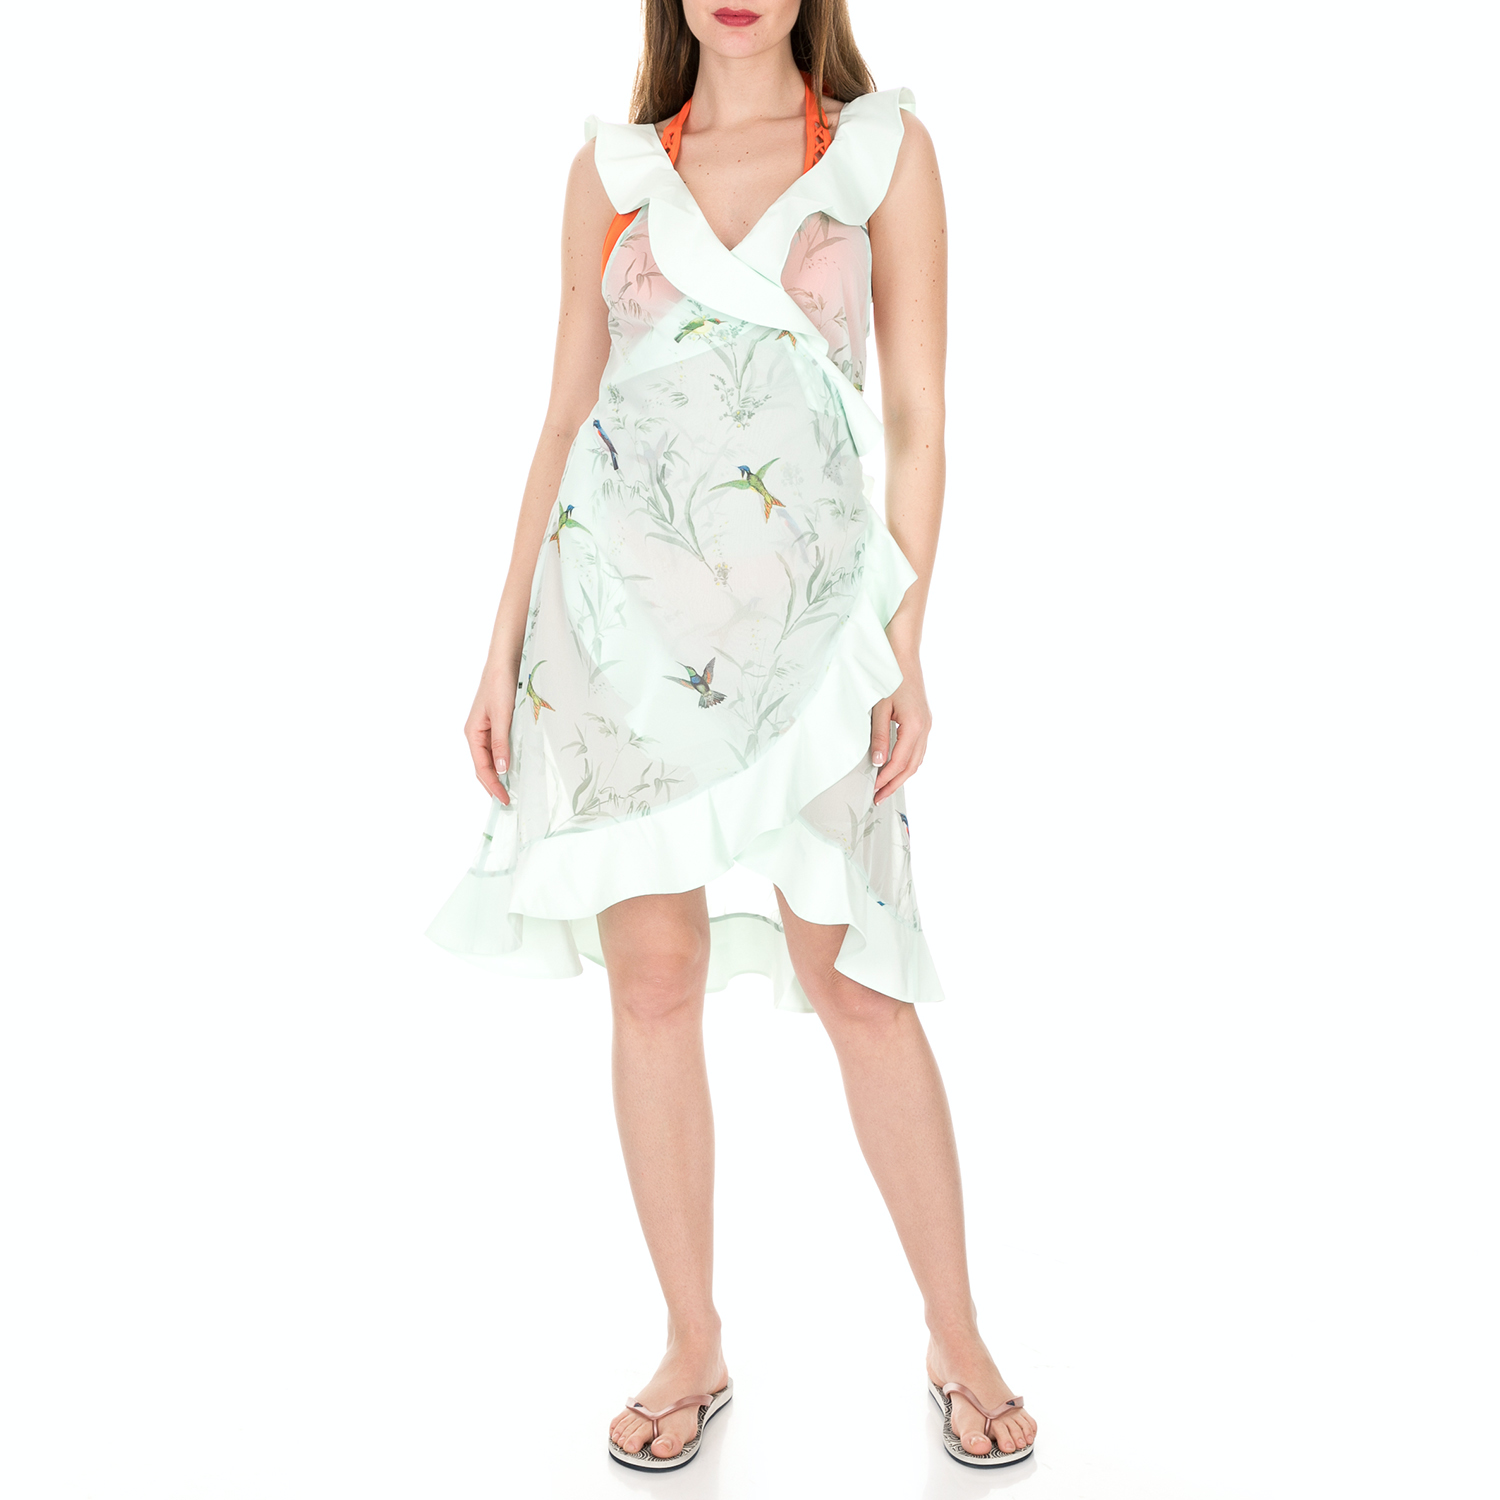 TED BAKER - Γυναικείο κρουαζέ φόρεμα παραλίας TED BAKER DAISLEE FORTUNE λευκό Γυναικεία/Ρούχα/Beachwear